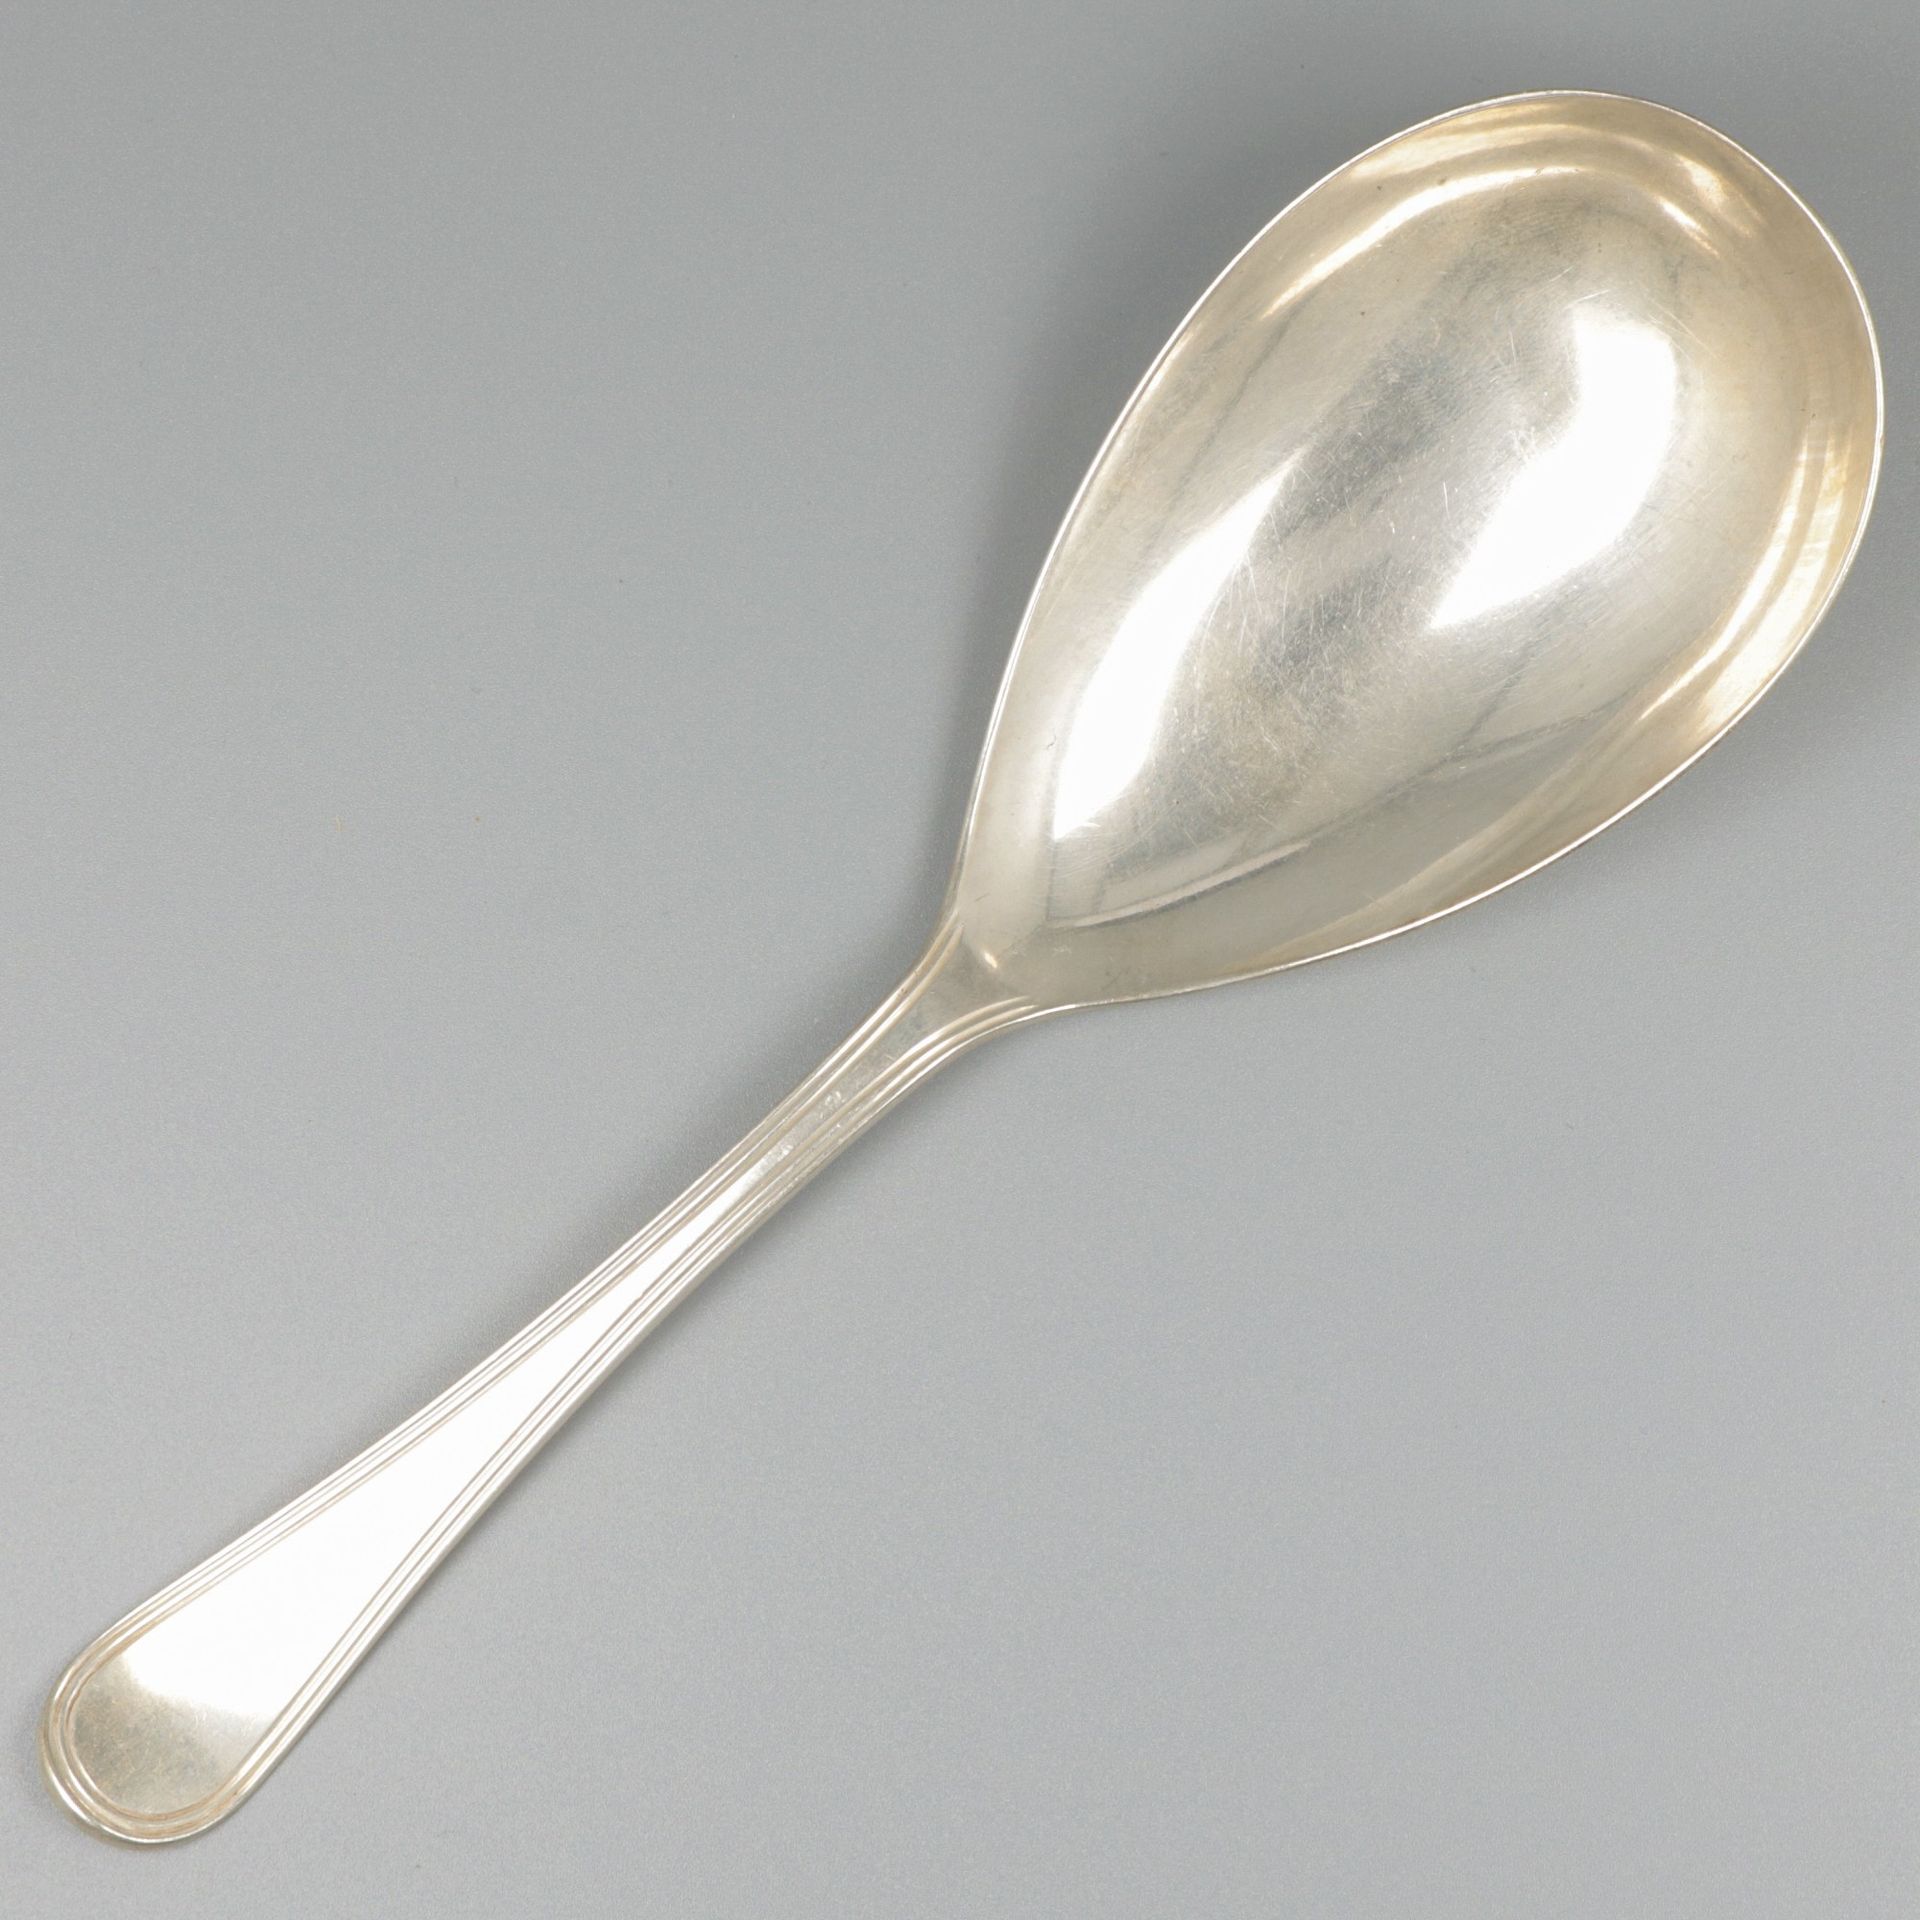 Rice spoon silver. "Hollands Rondfilet "或荷兰圆形锉刀。荷兰，阿姆斯特丹，Daniel van Outvorst，190&hellip;